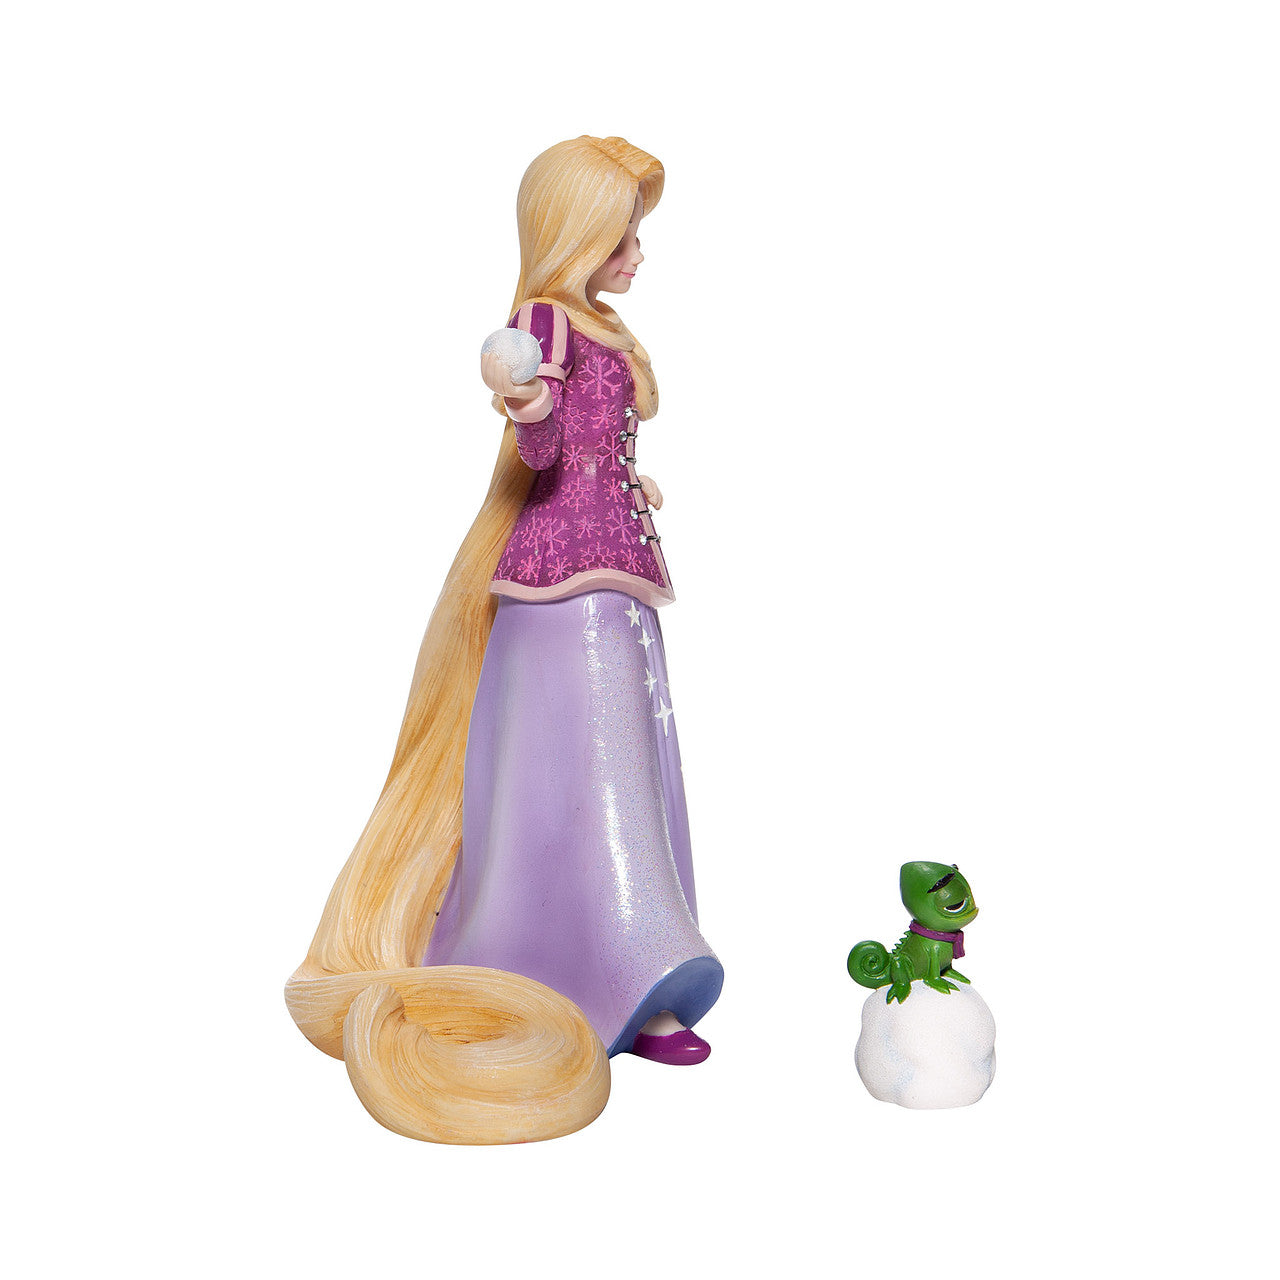 Rapunzel with Pascal Figurine